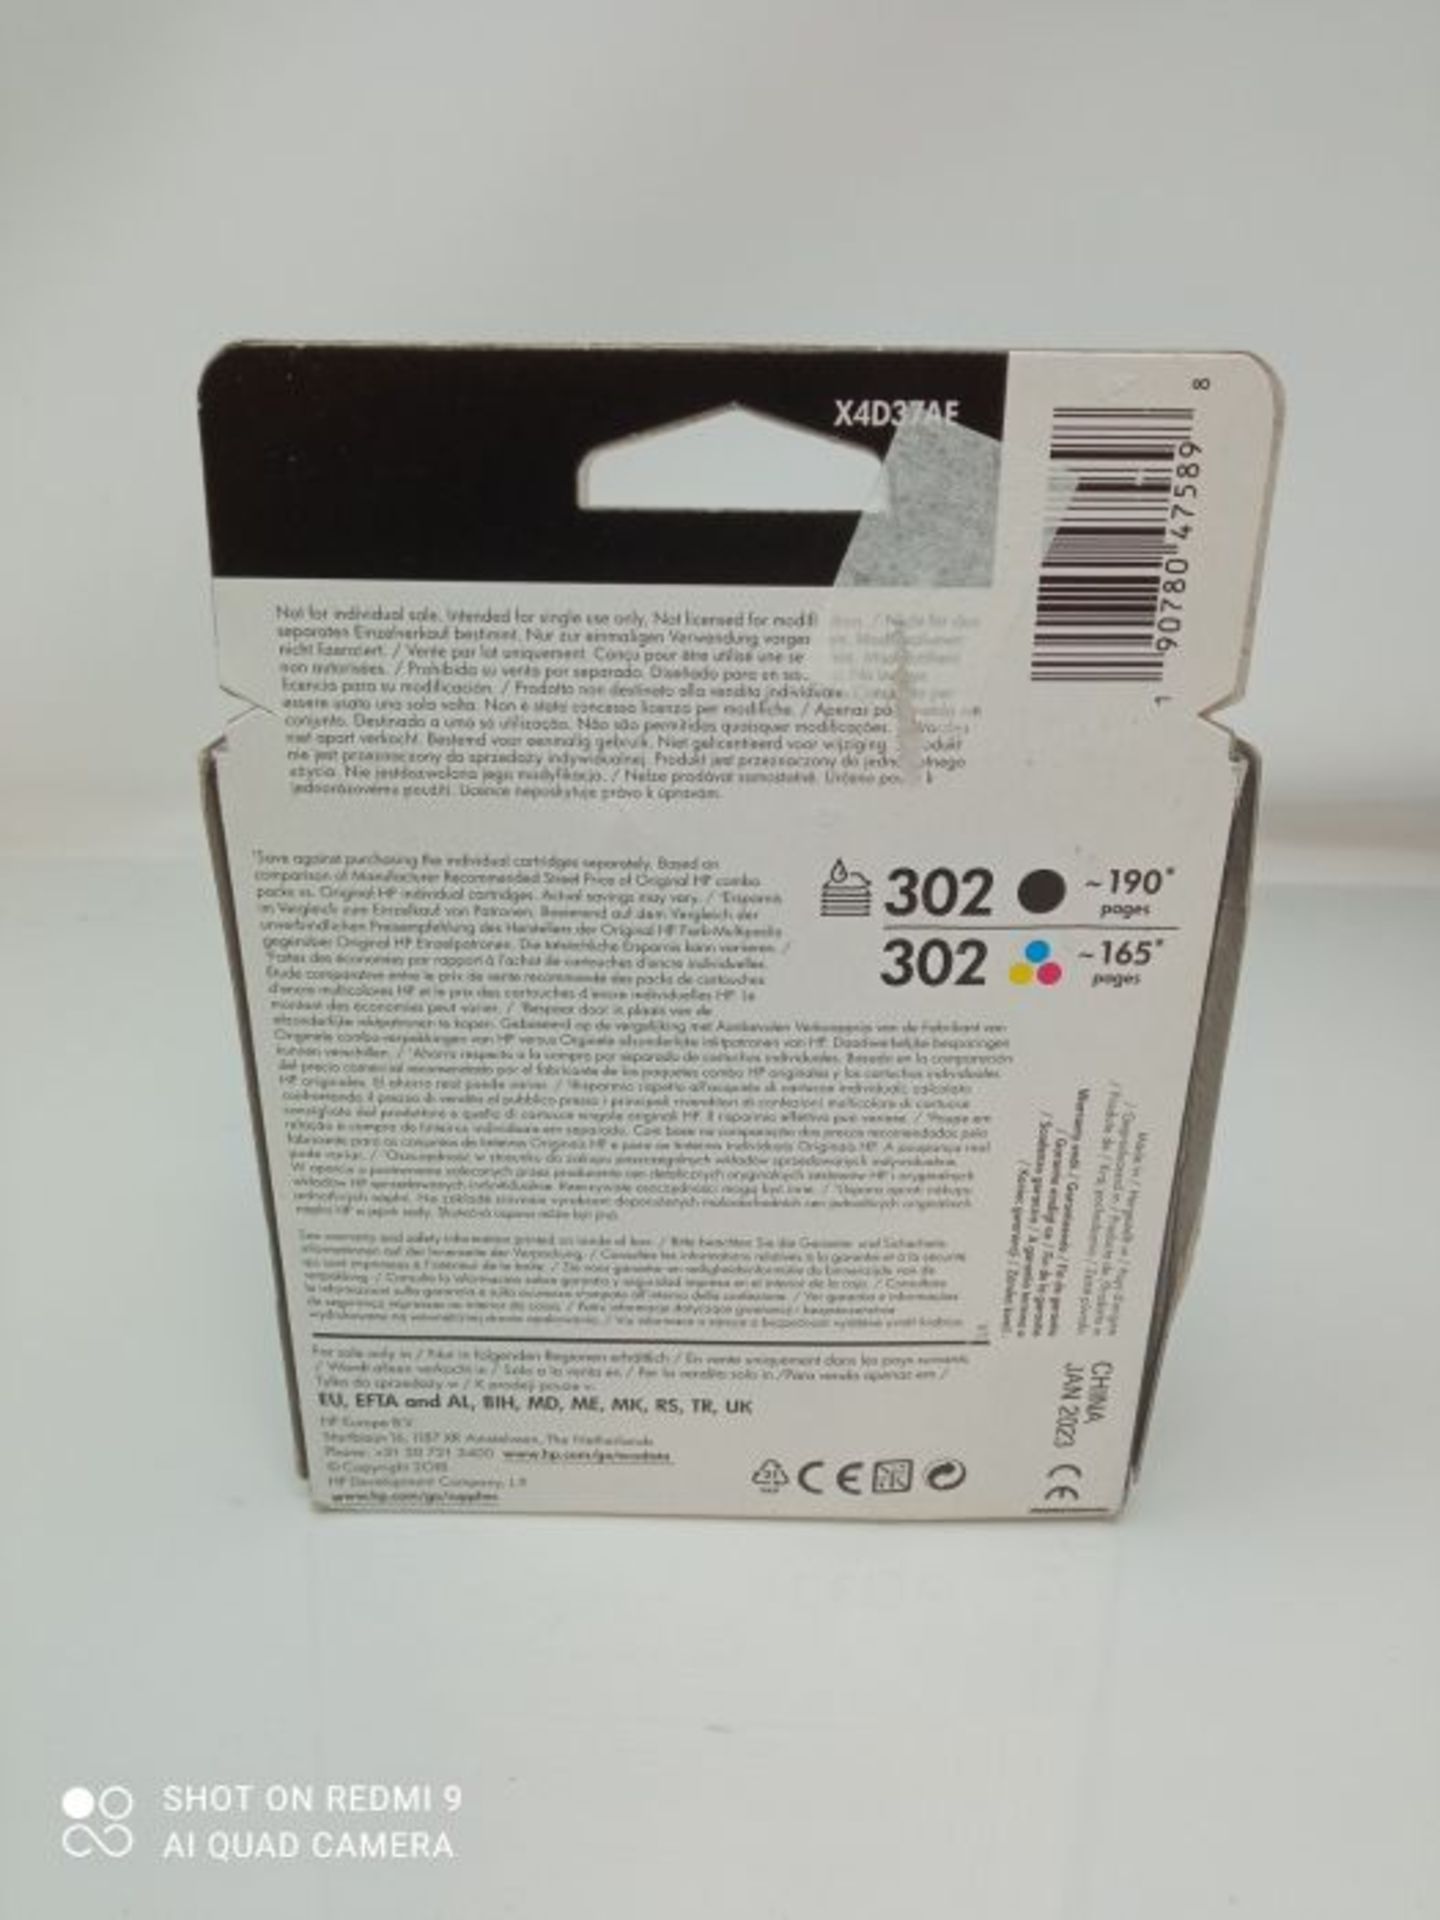 HP X4D37AE 302 Original Ink Cartridges, Black and Tri-color, Multipack - Image 3 of 3